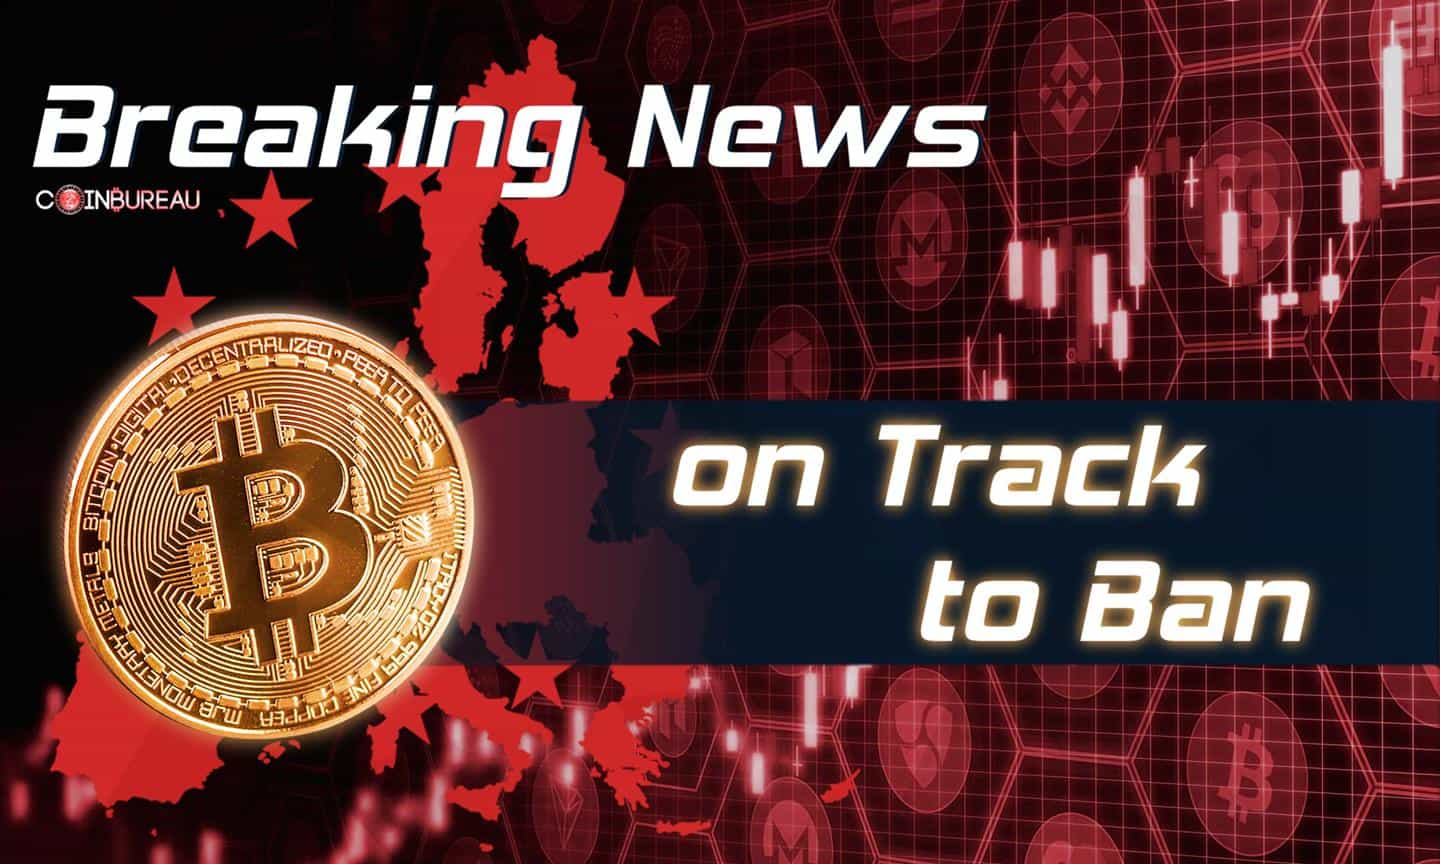 EU on Track to Ban Bitcoin